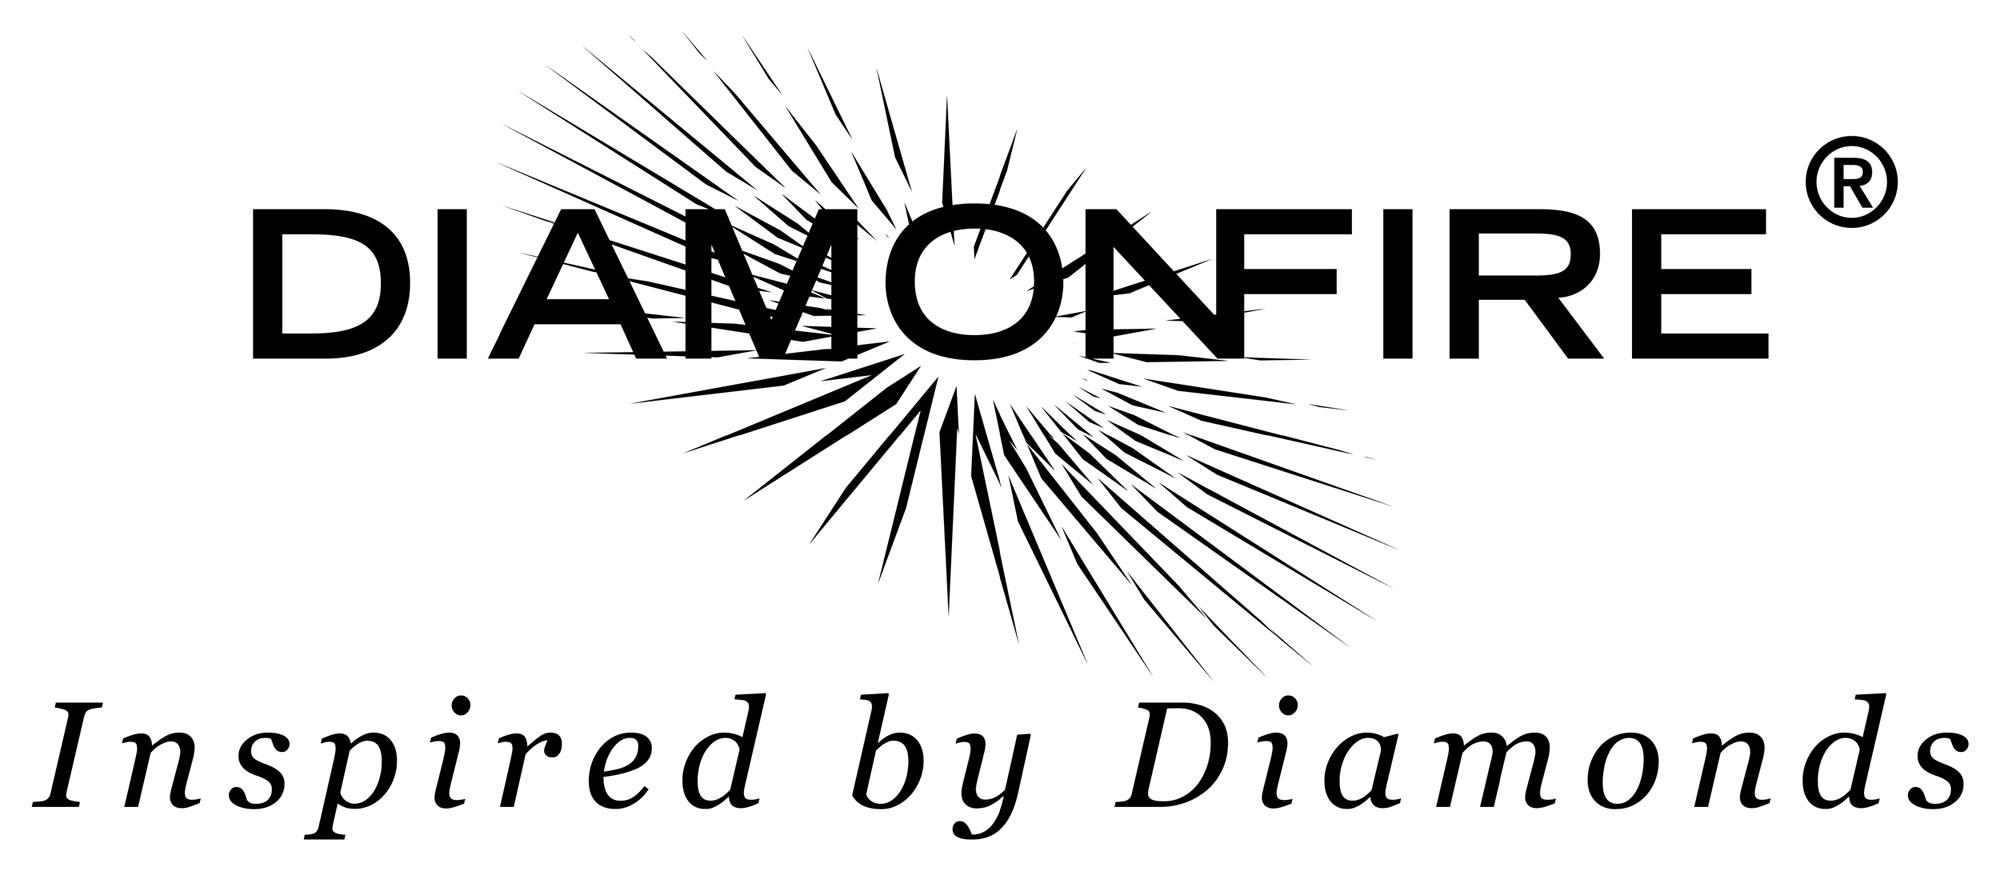 Diamonfire logo